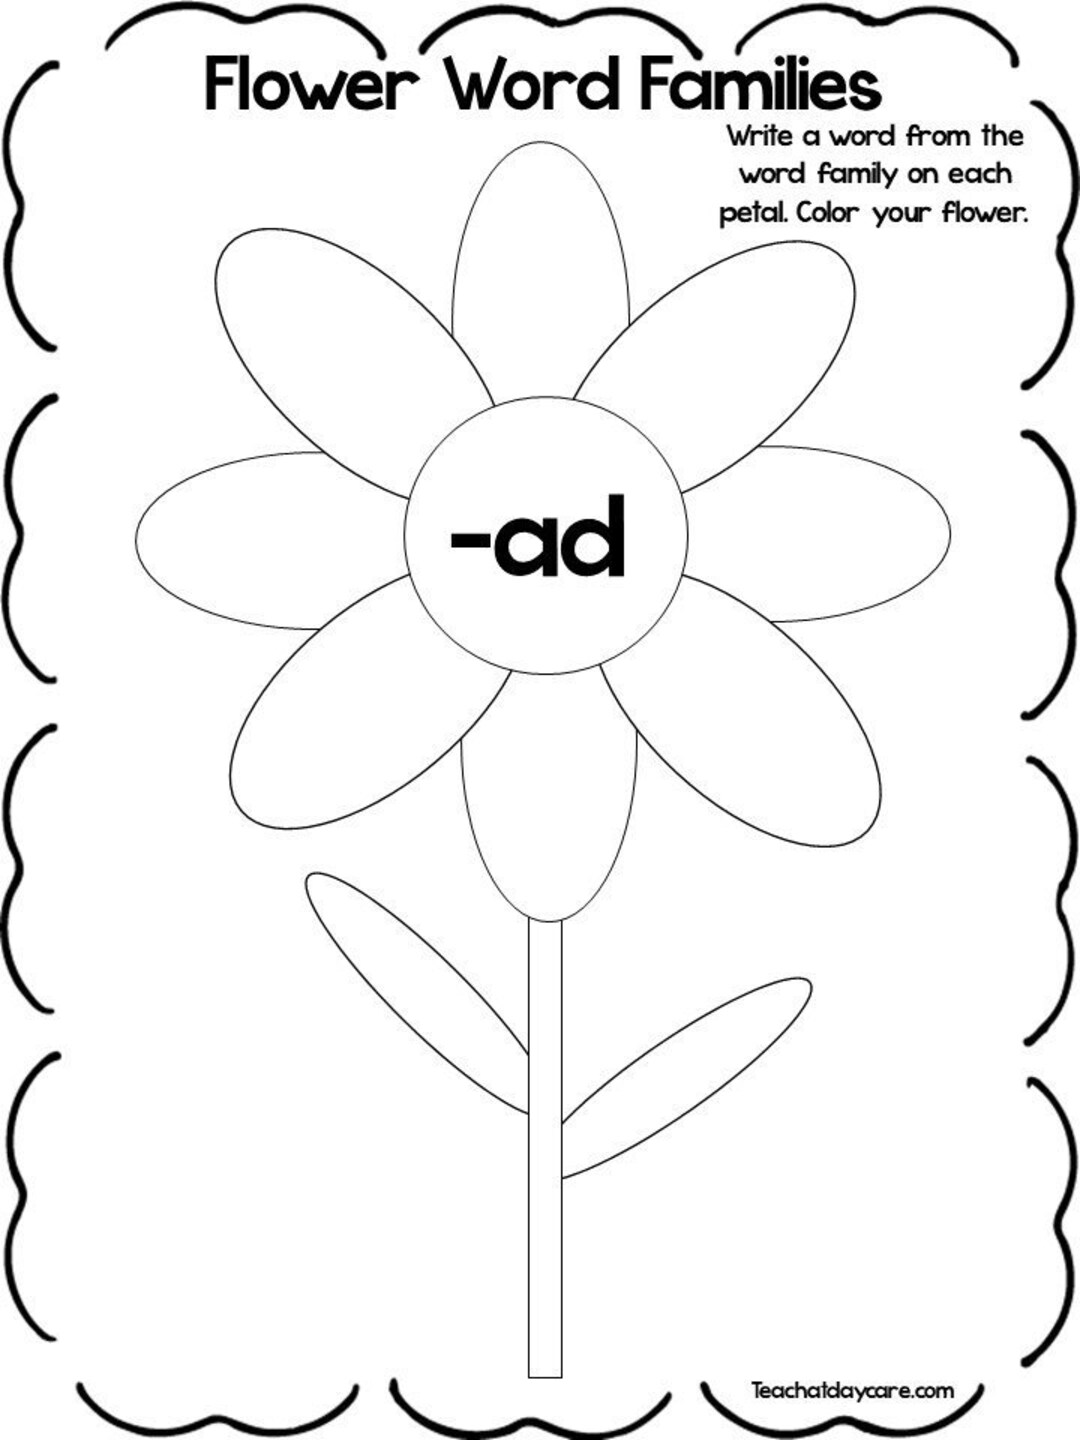 Printable flower word families worksheets preschool phonics activity instant download